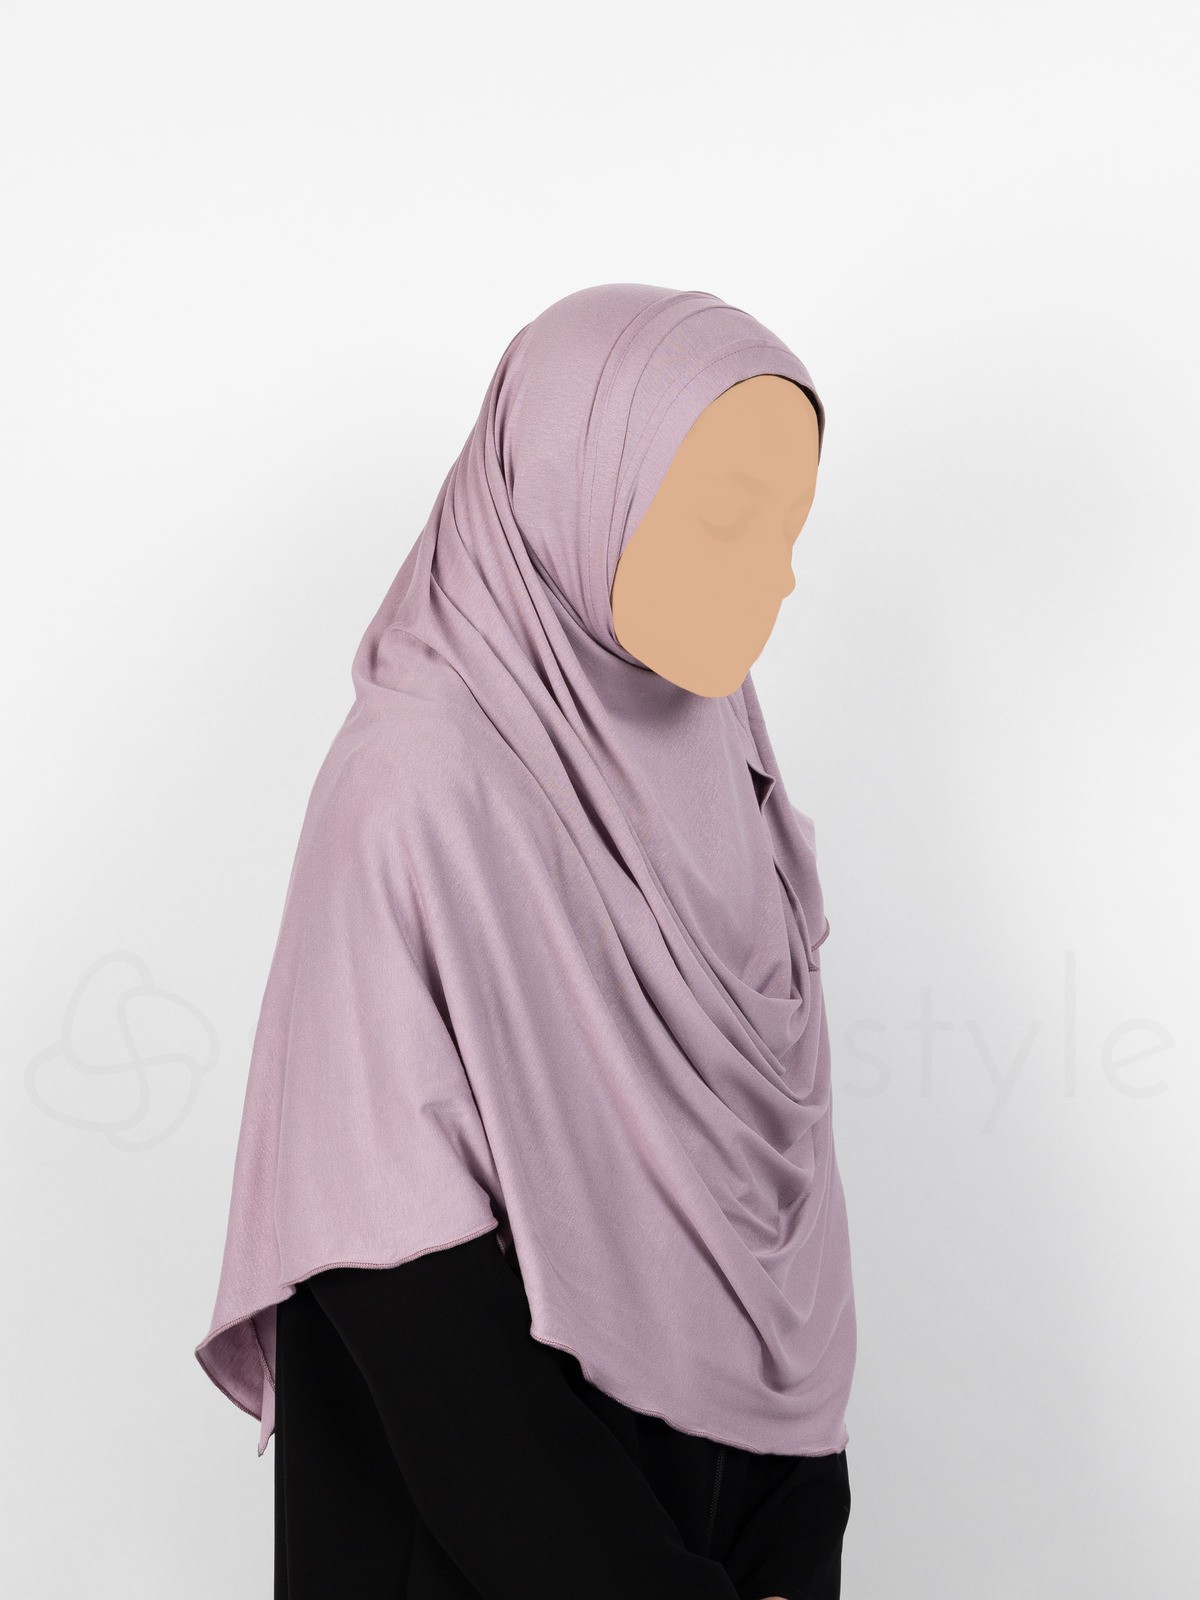 Sunnah Style - Girls Truss Hijab (Dusty Mauve)